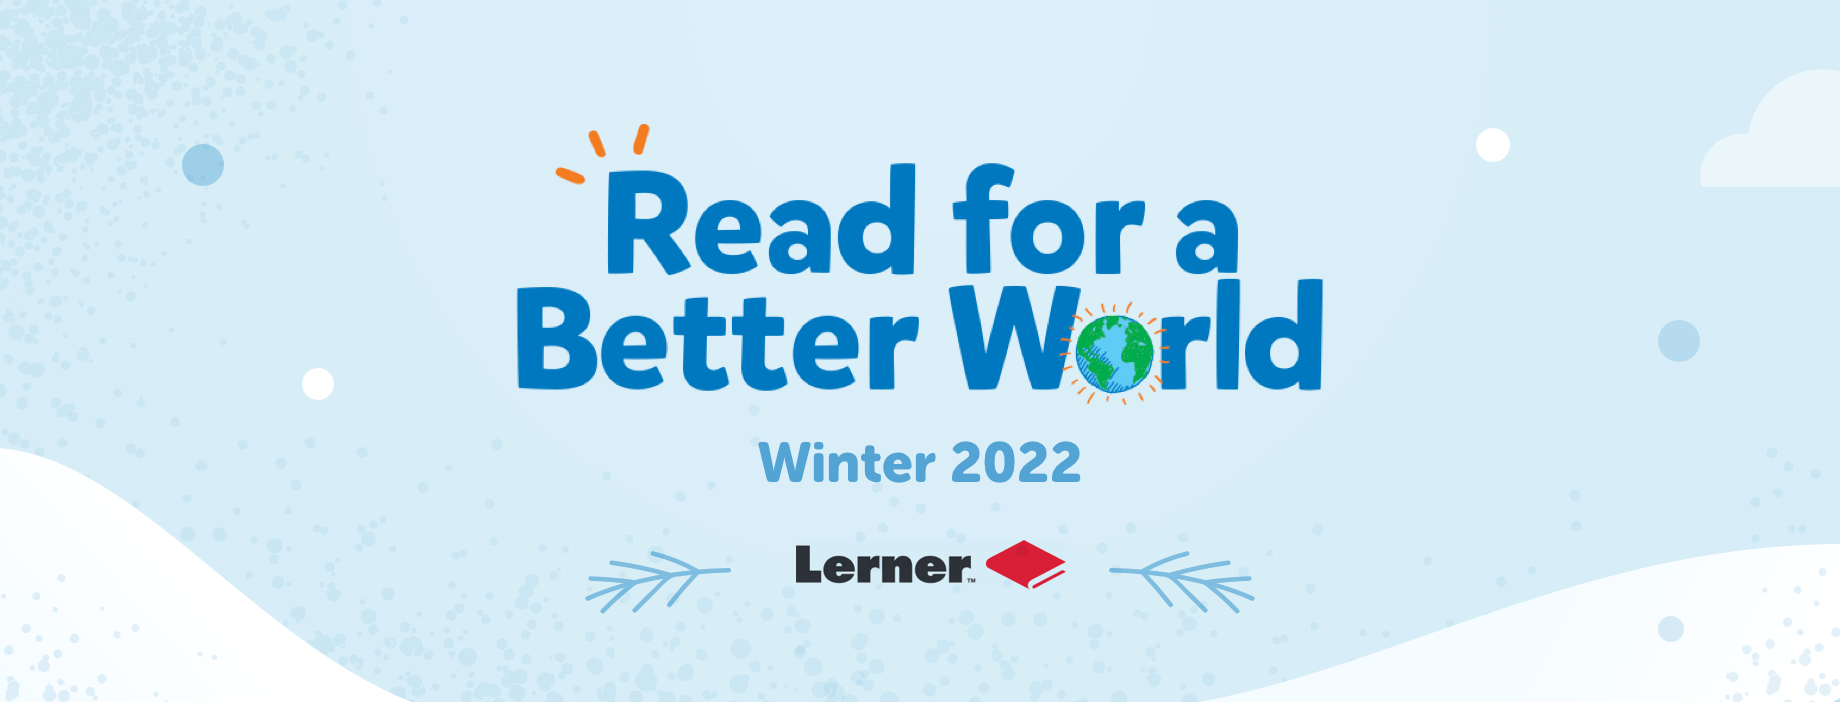 Winter Reading 2022 Challenge-1